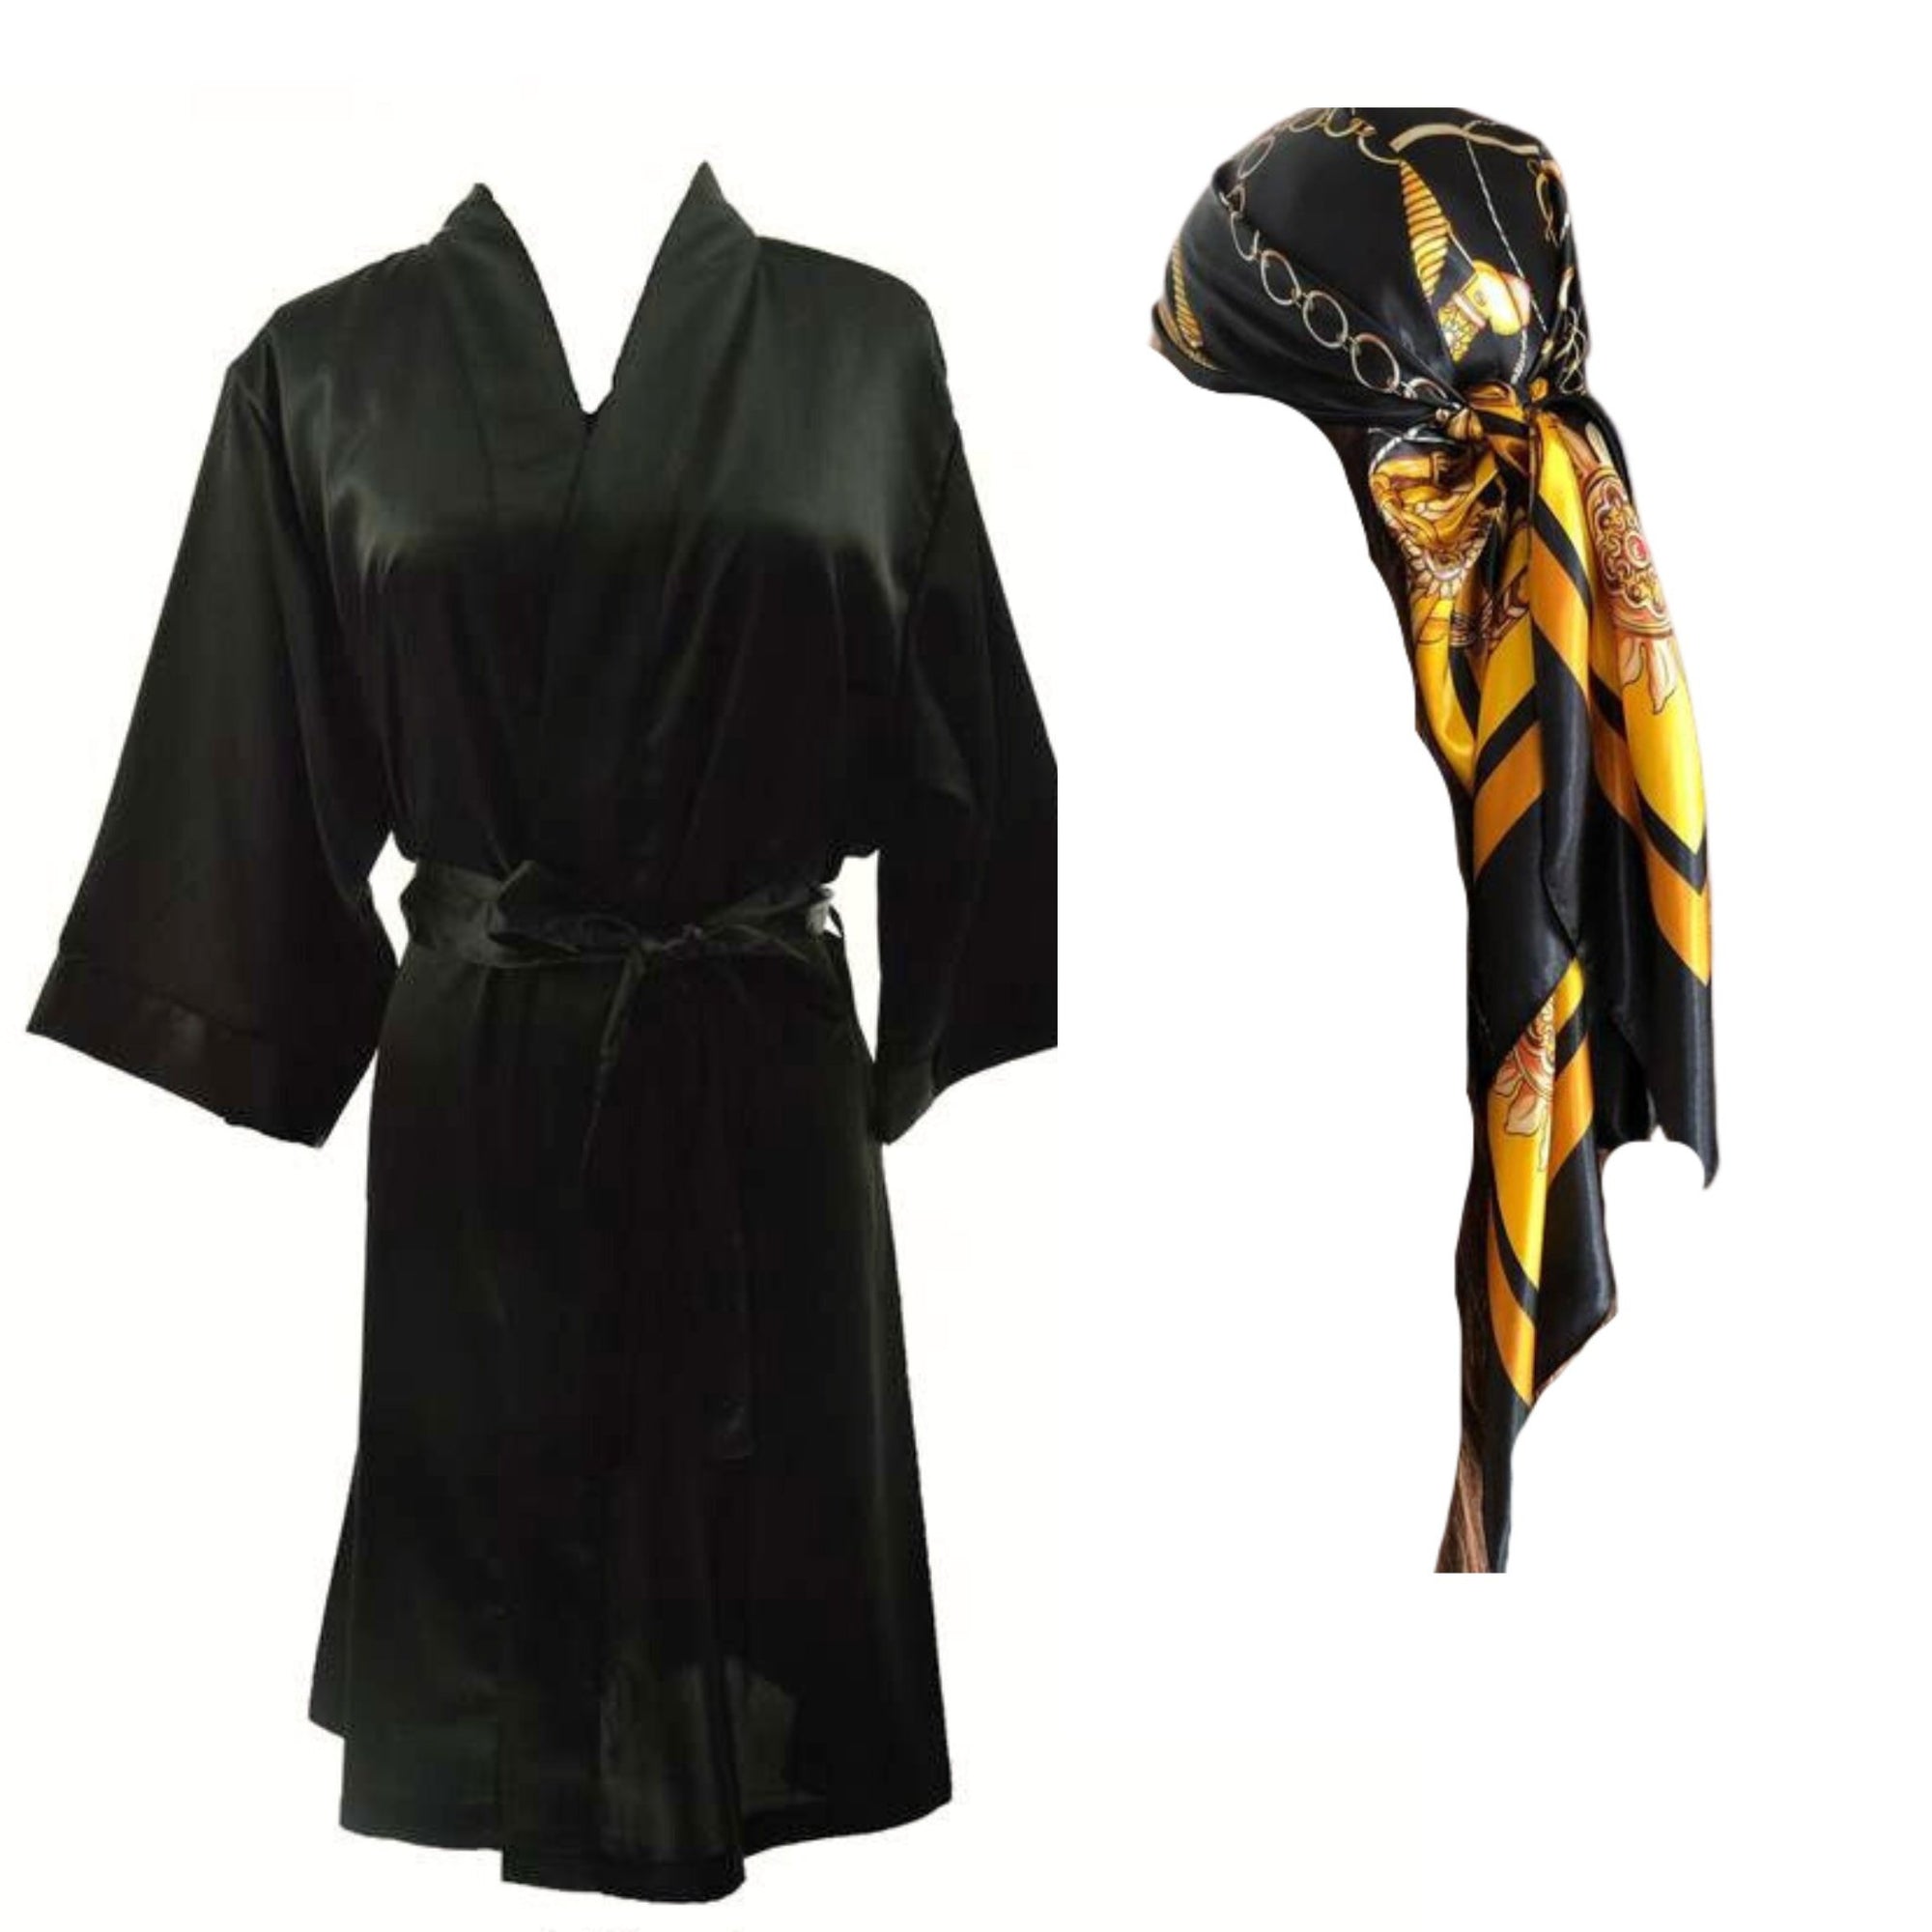 black satin robe and matching black satin head wrap